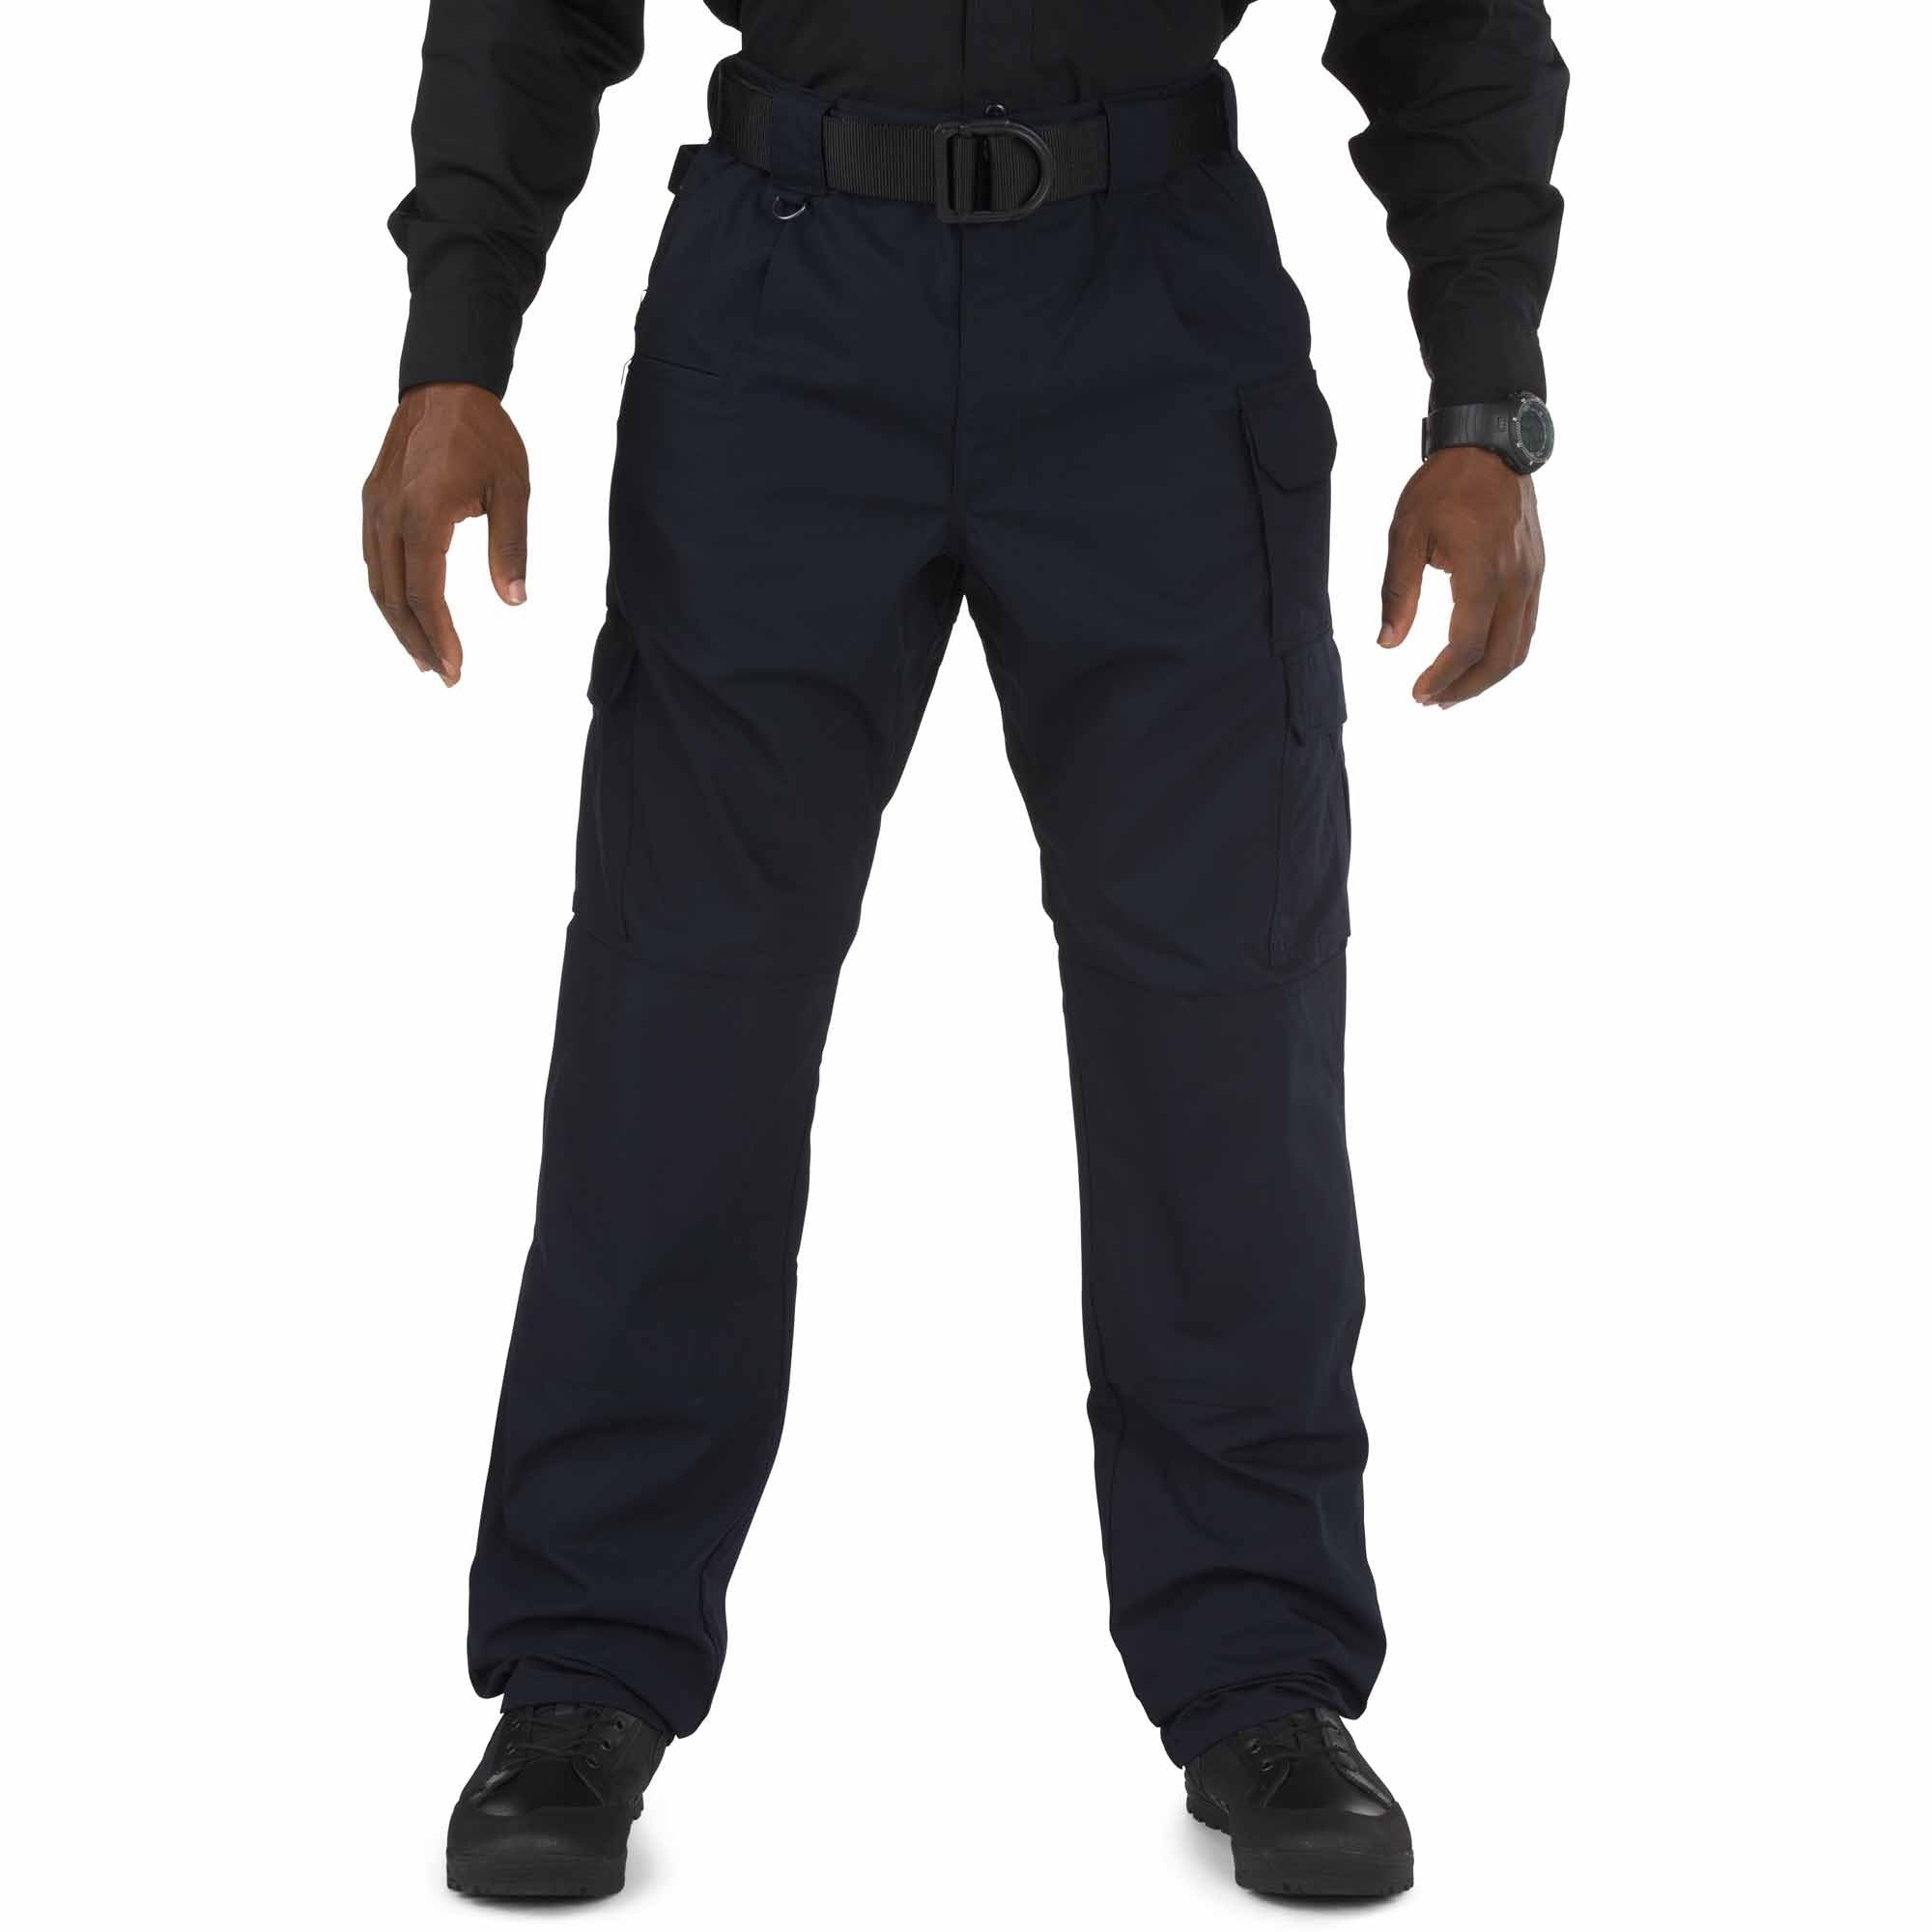 5.11 Tactical Taclite Pro Pants - Dark Navy Pants 5.11 Tactical Tactical Gear Supplier Tactical Distributors Australia